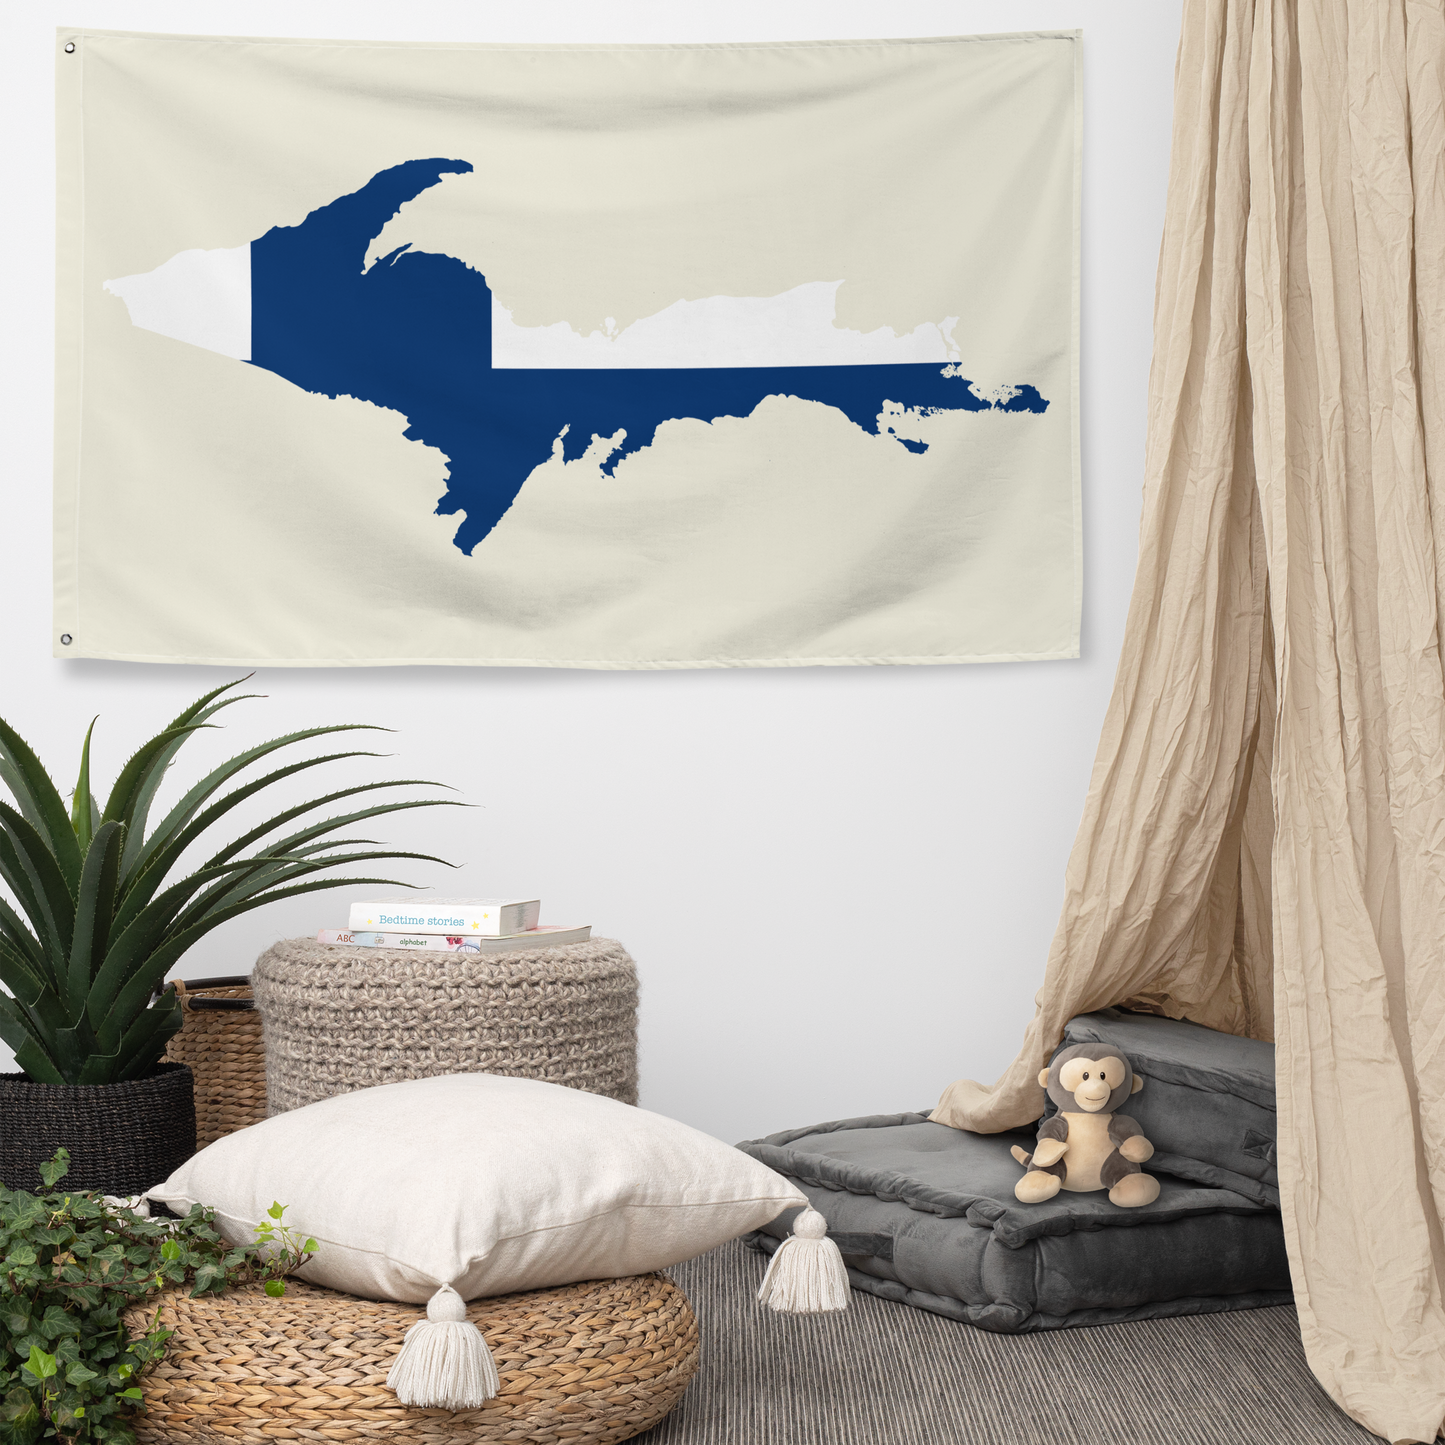 Michigan Upper Peninsula Wall Flag (w/ UP Finland Flag) | Ivory White